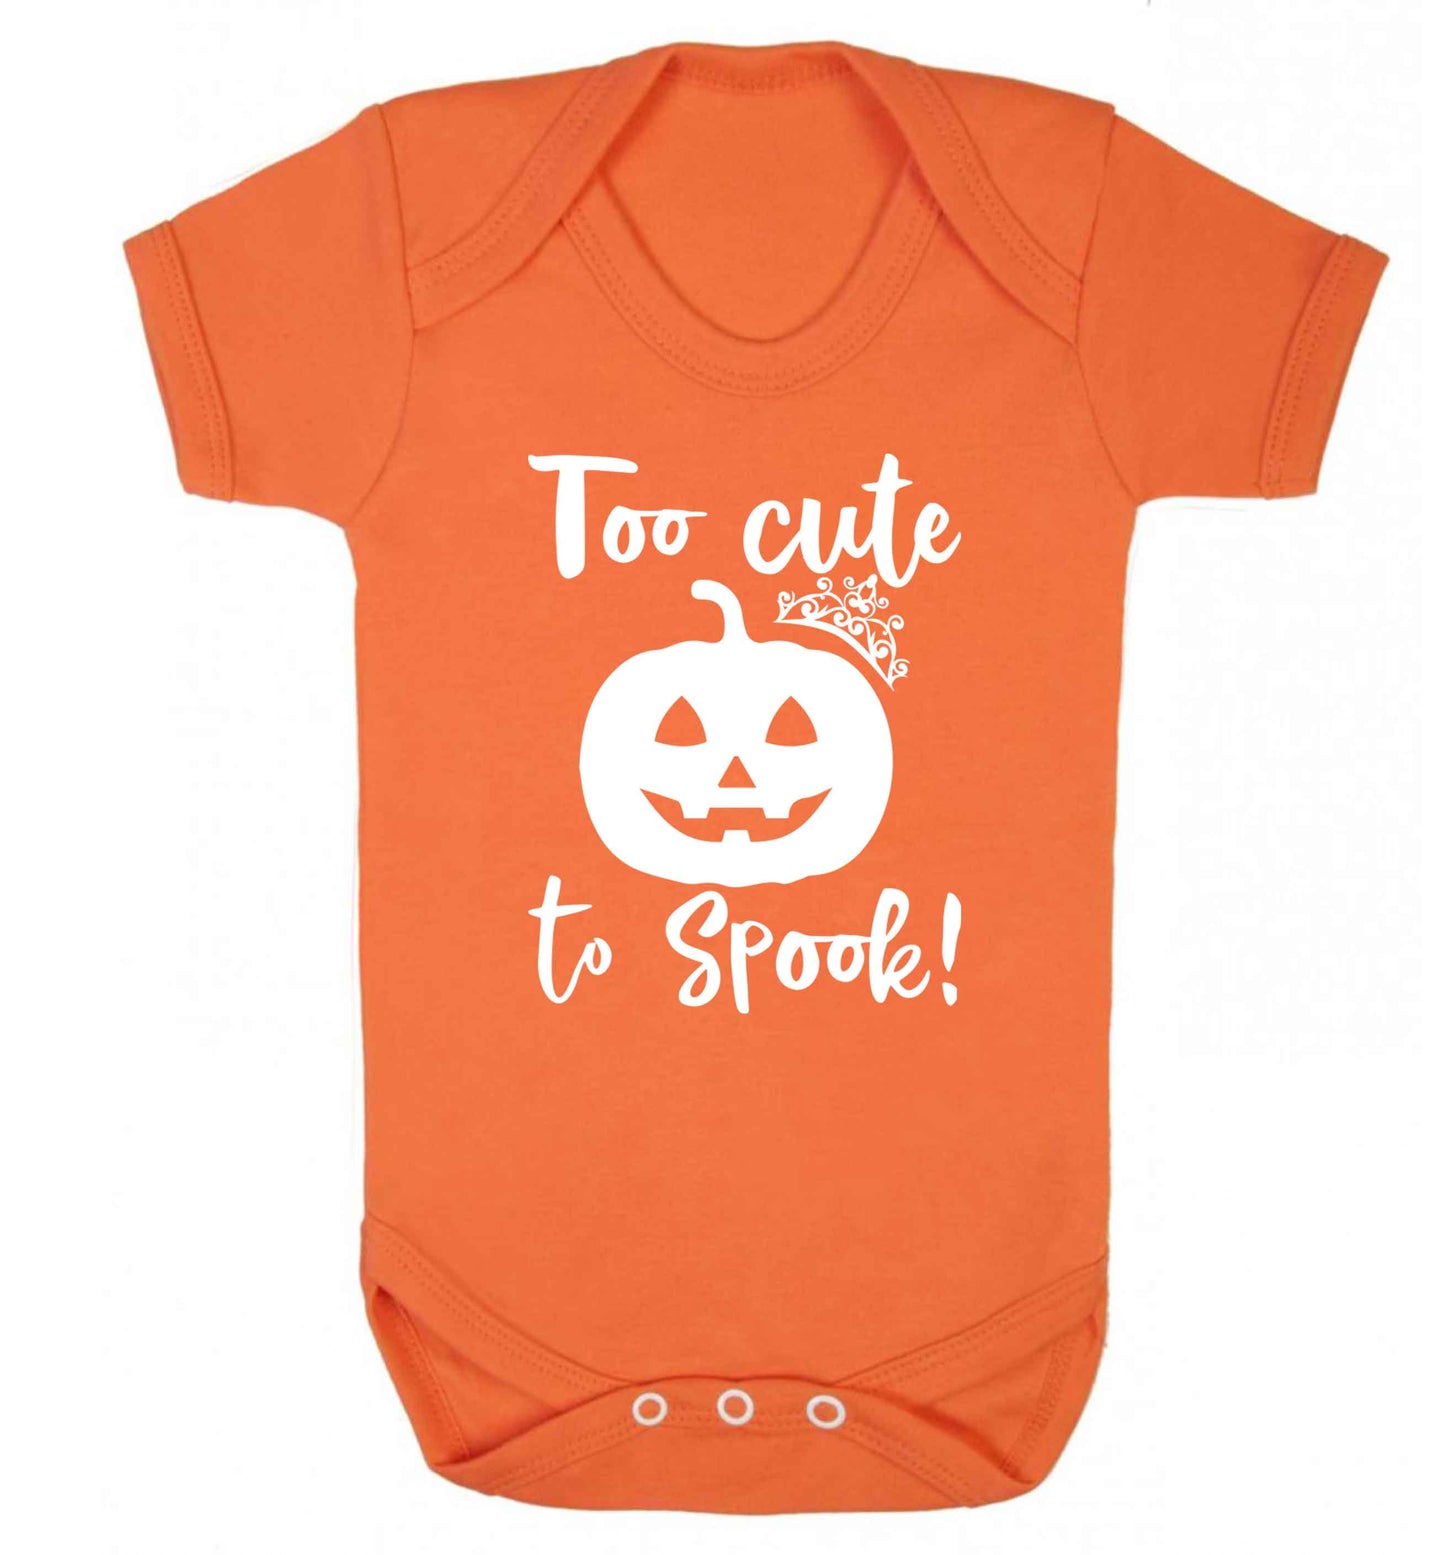 Too cute to spook! Baby Vest orange 18-24 months